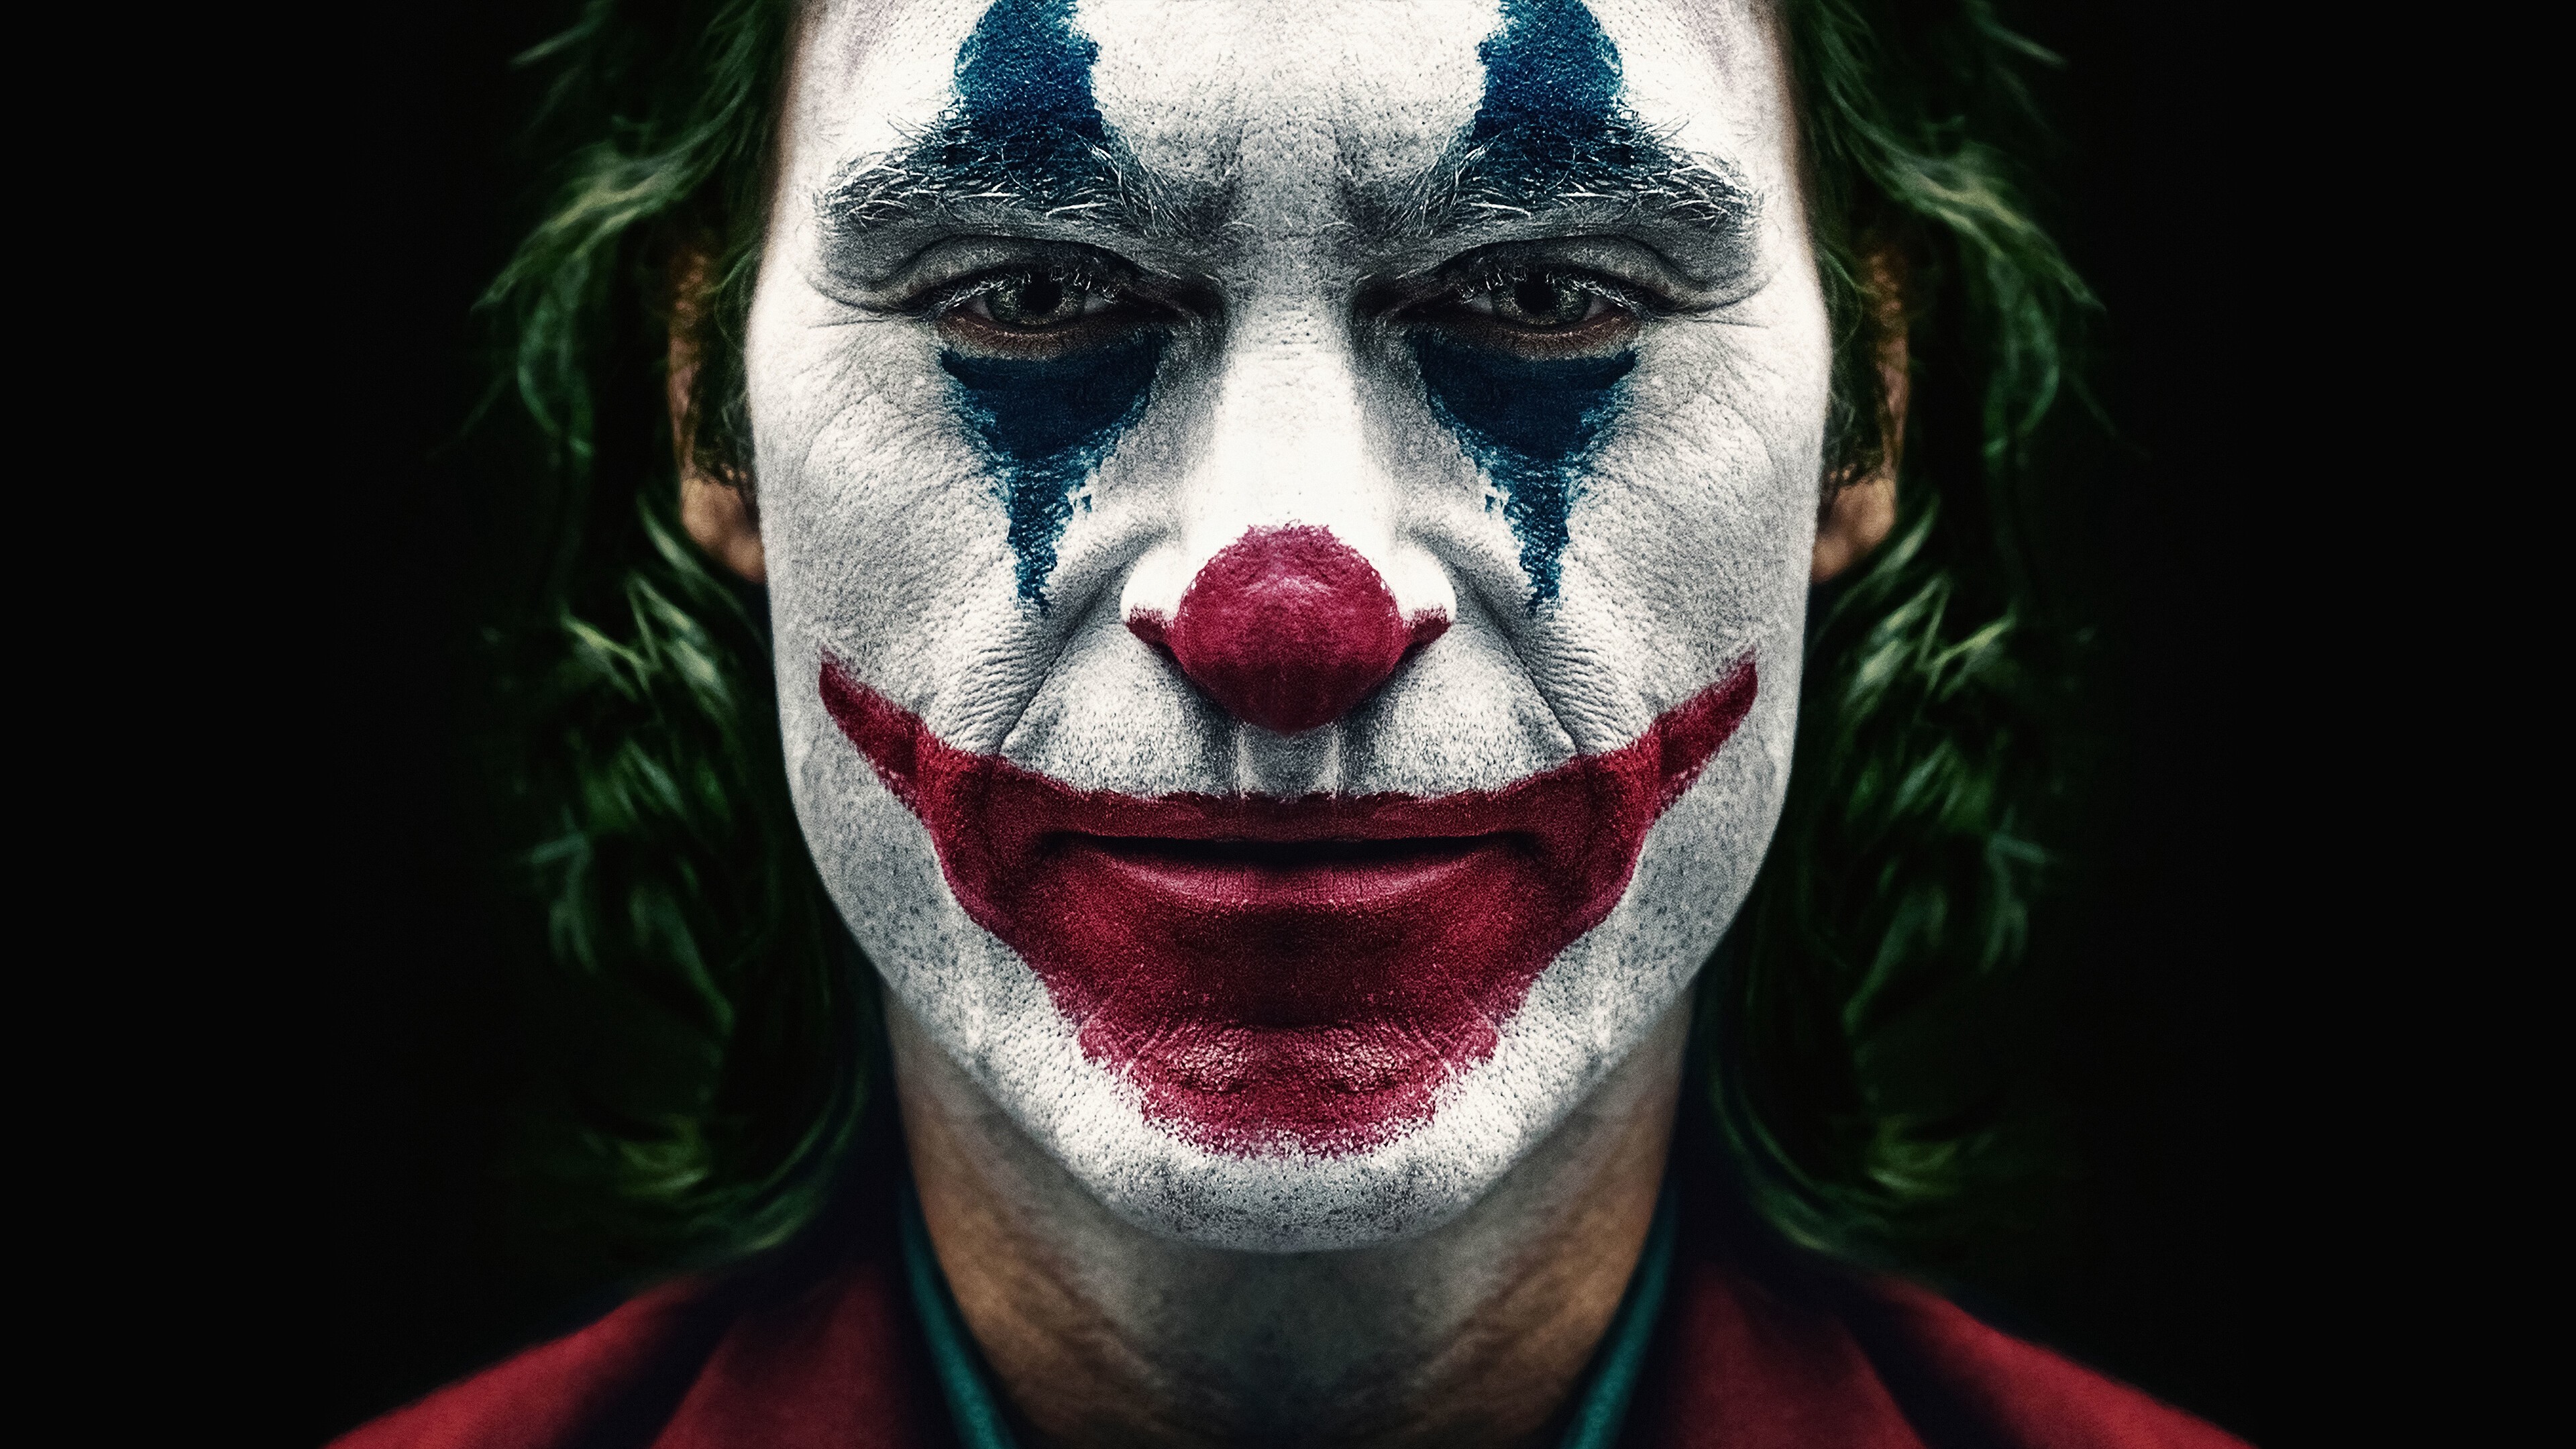 Joker 2019 Movie Joker Joaquin Phoenix Super Villain Movie Characters DC Universe 3840x2160